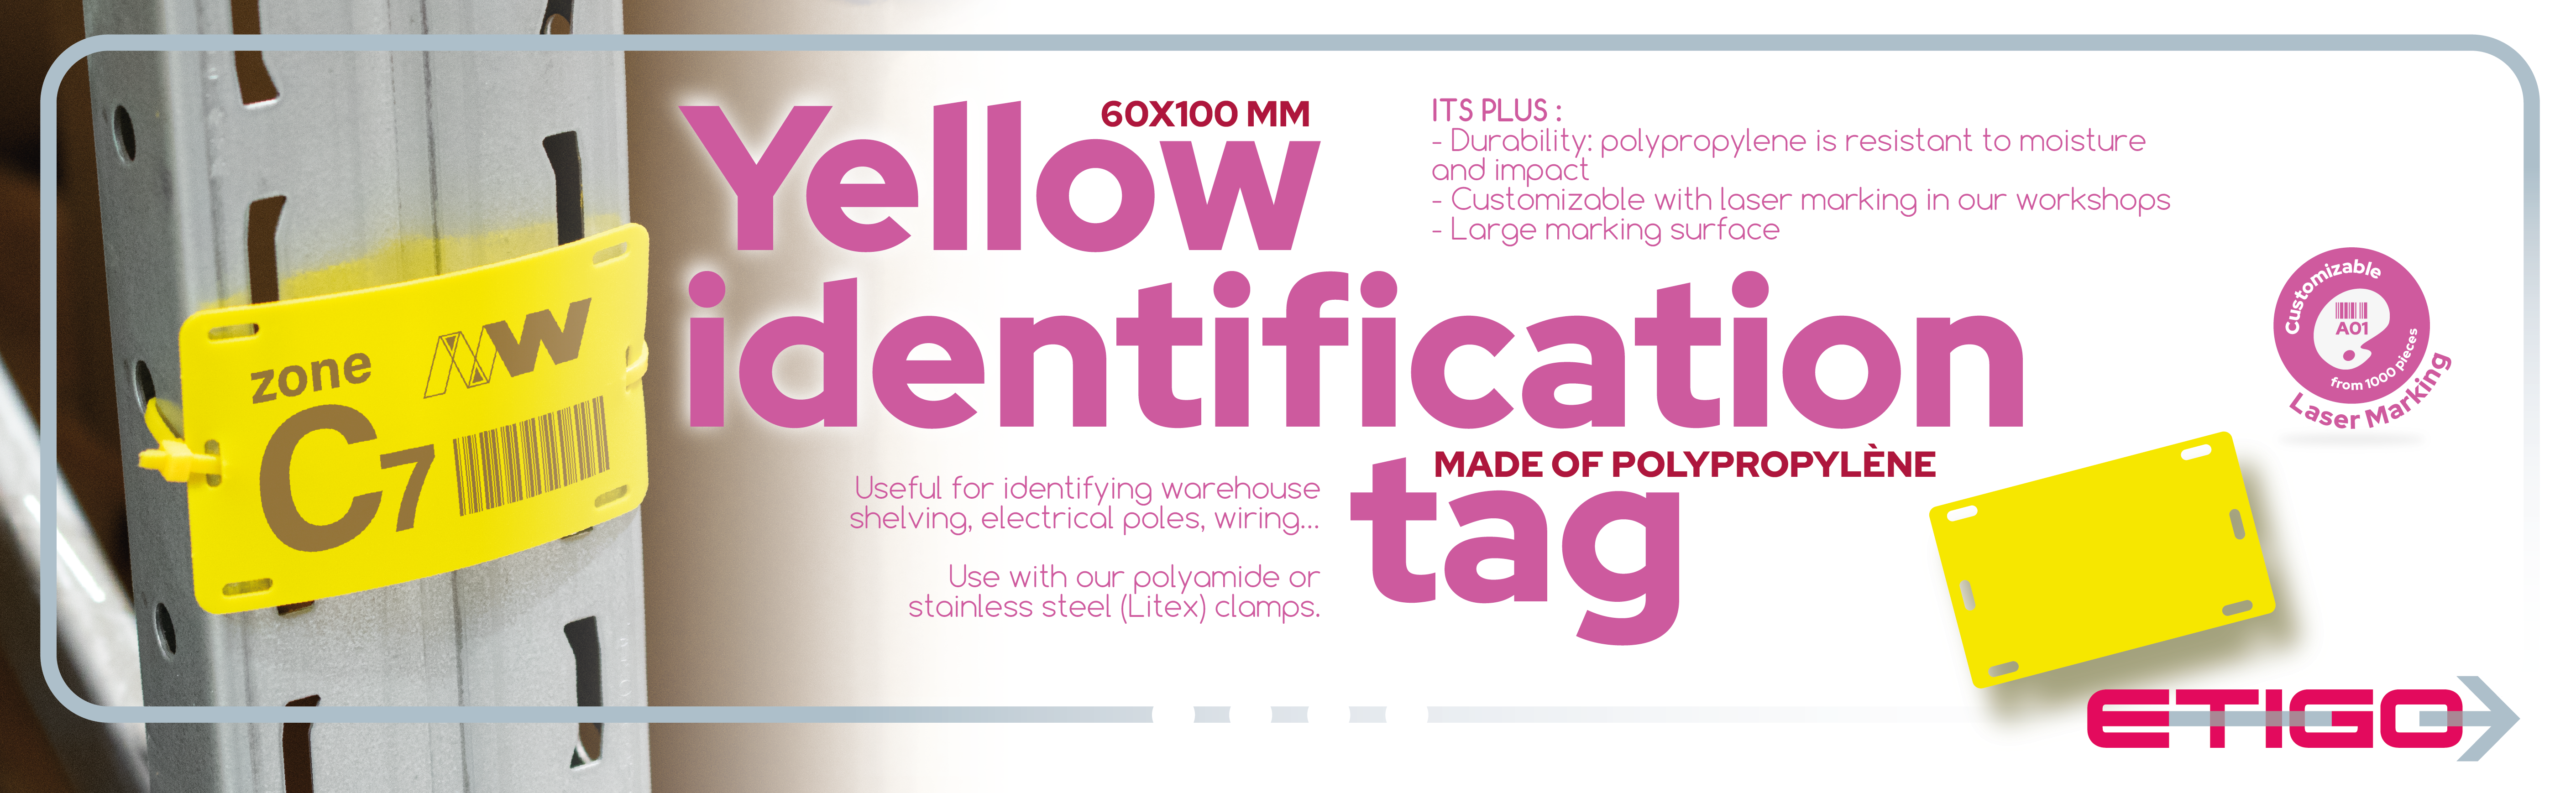 Yellow identification tag 